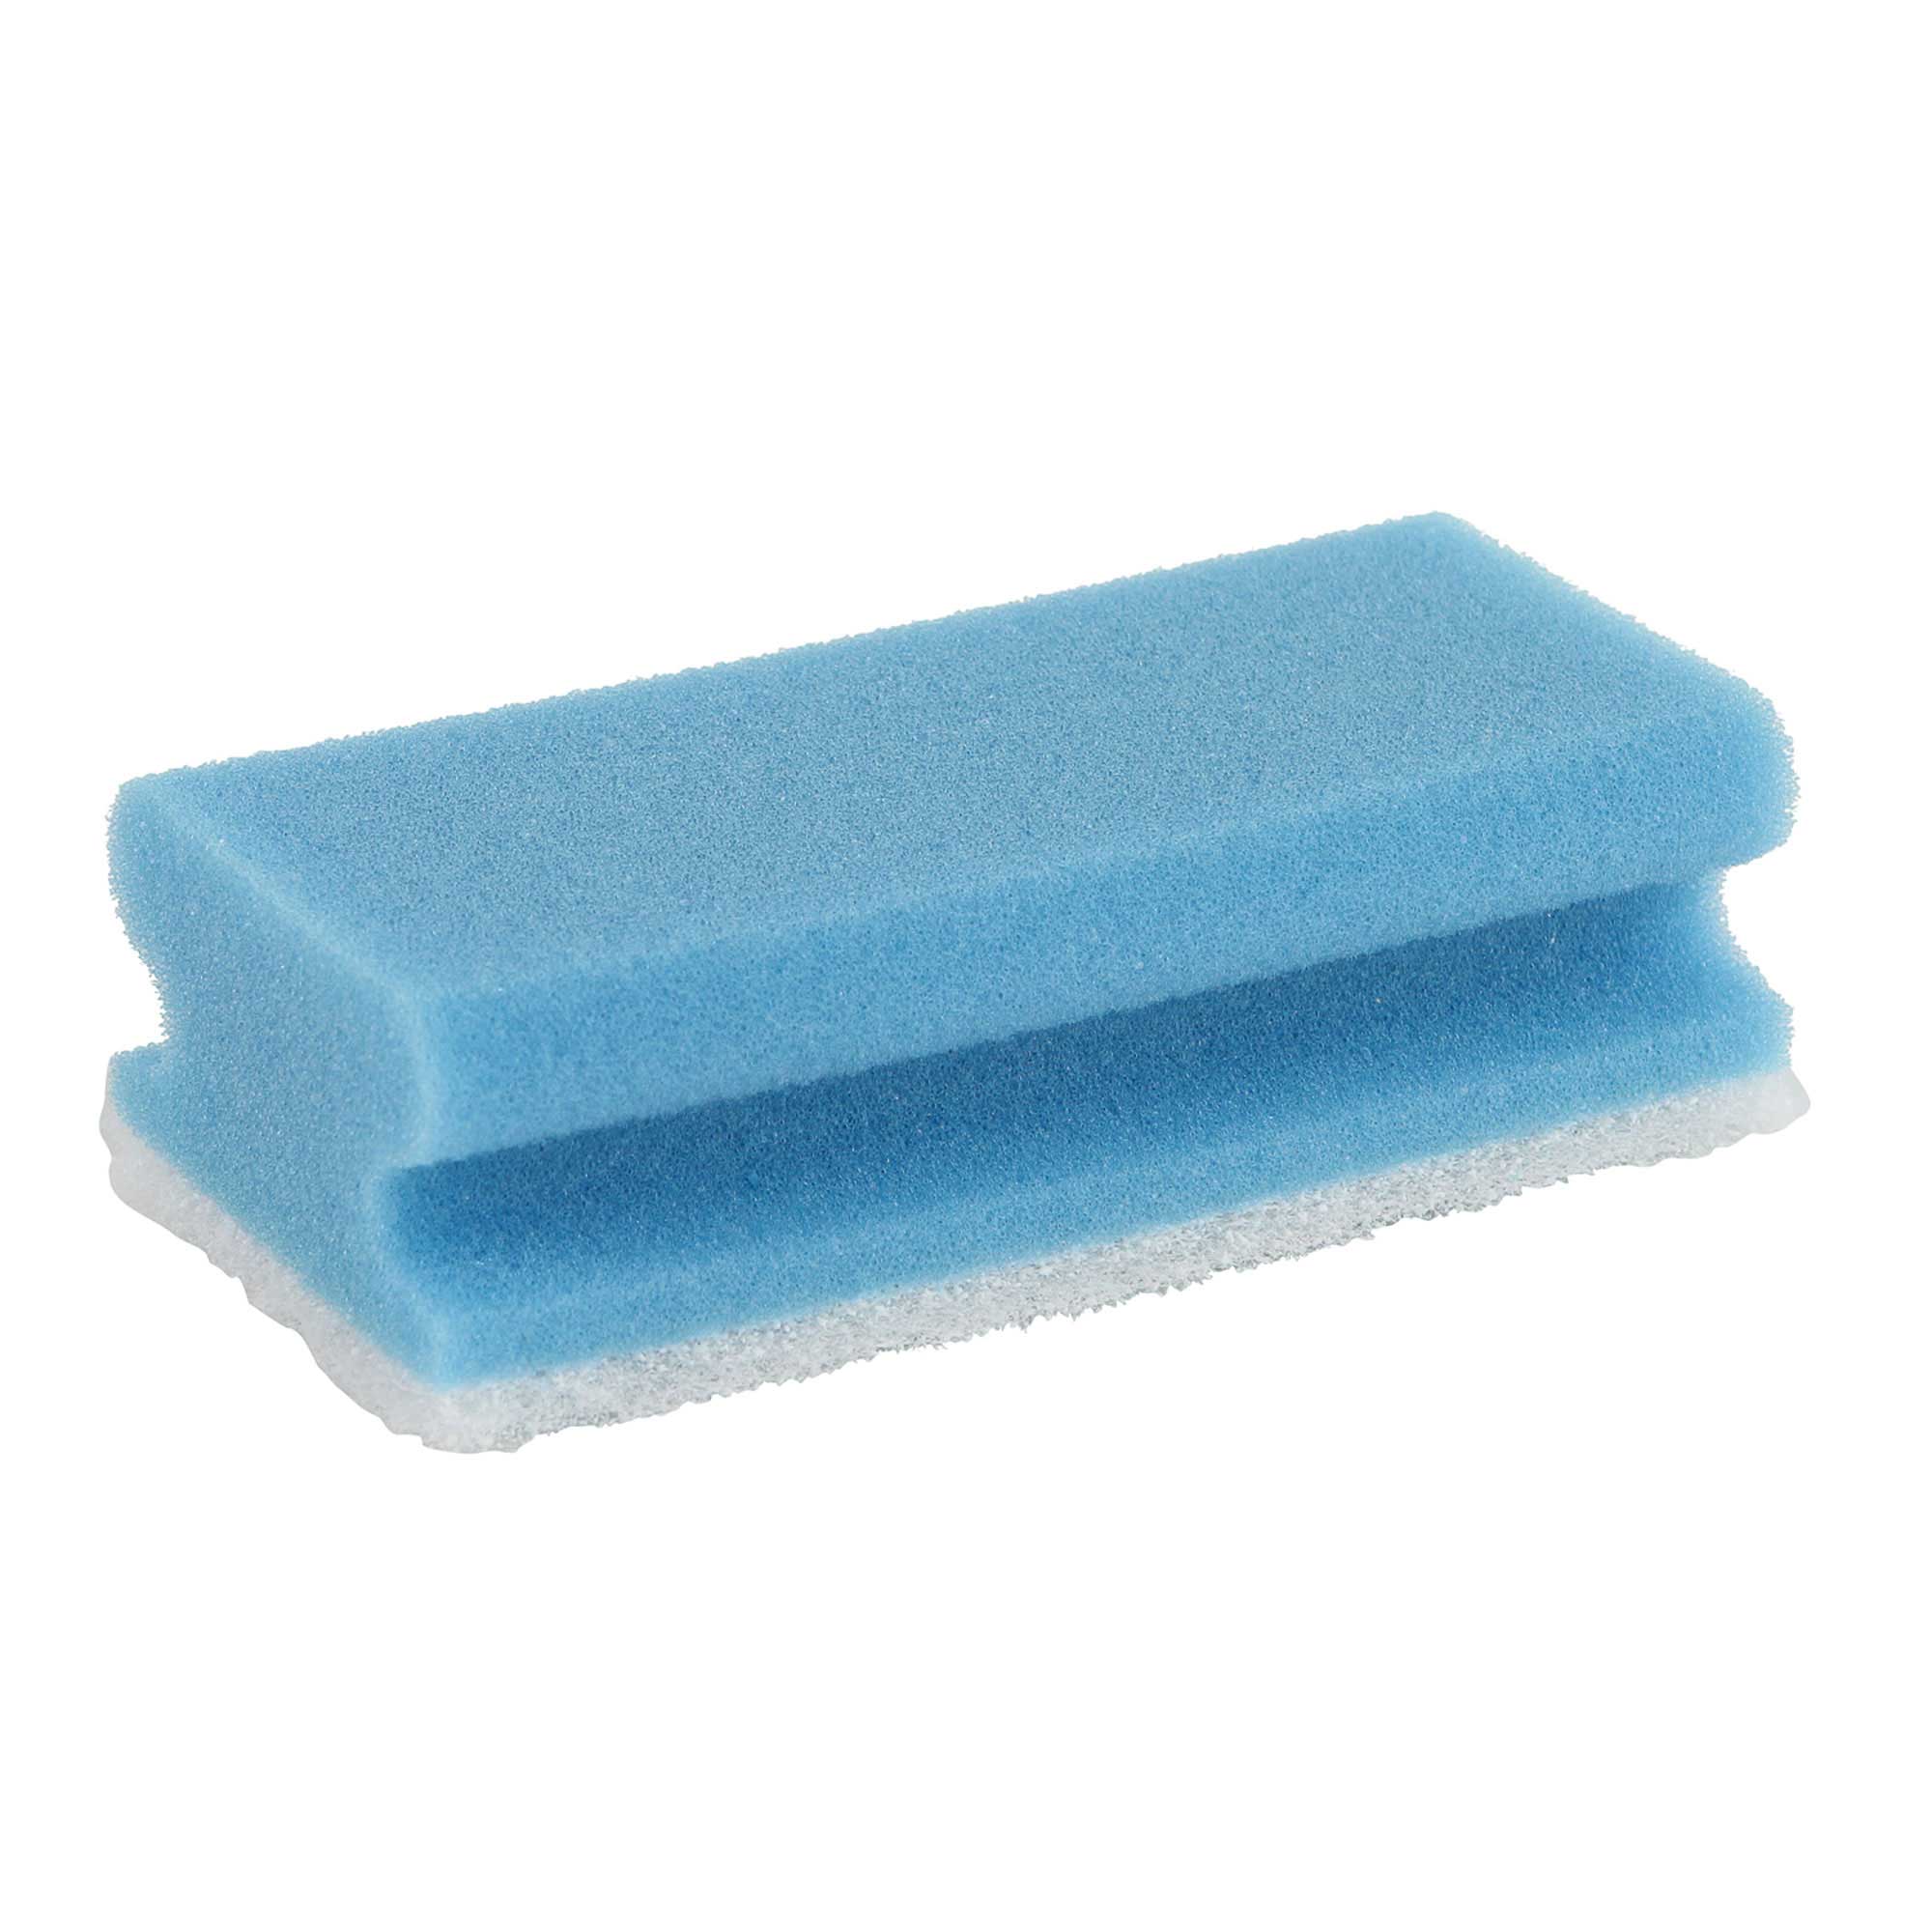 Schuurspons met greep set à 10 ca. 140x70x42 mm blauw / wit